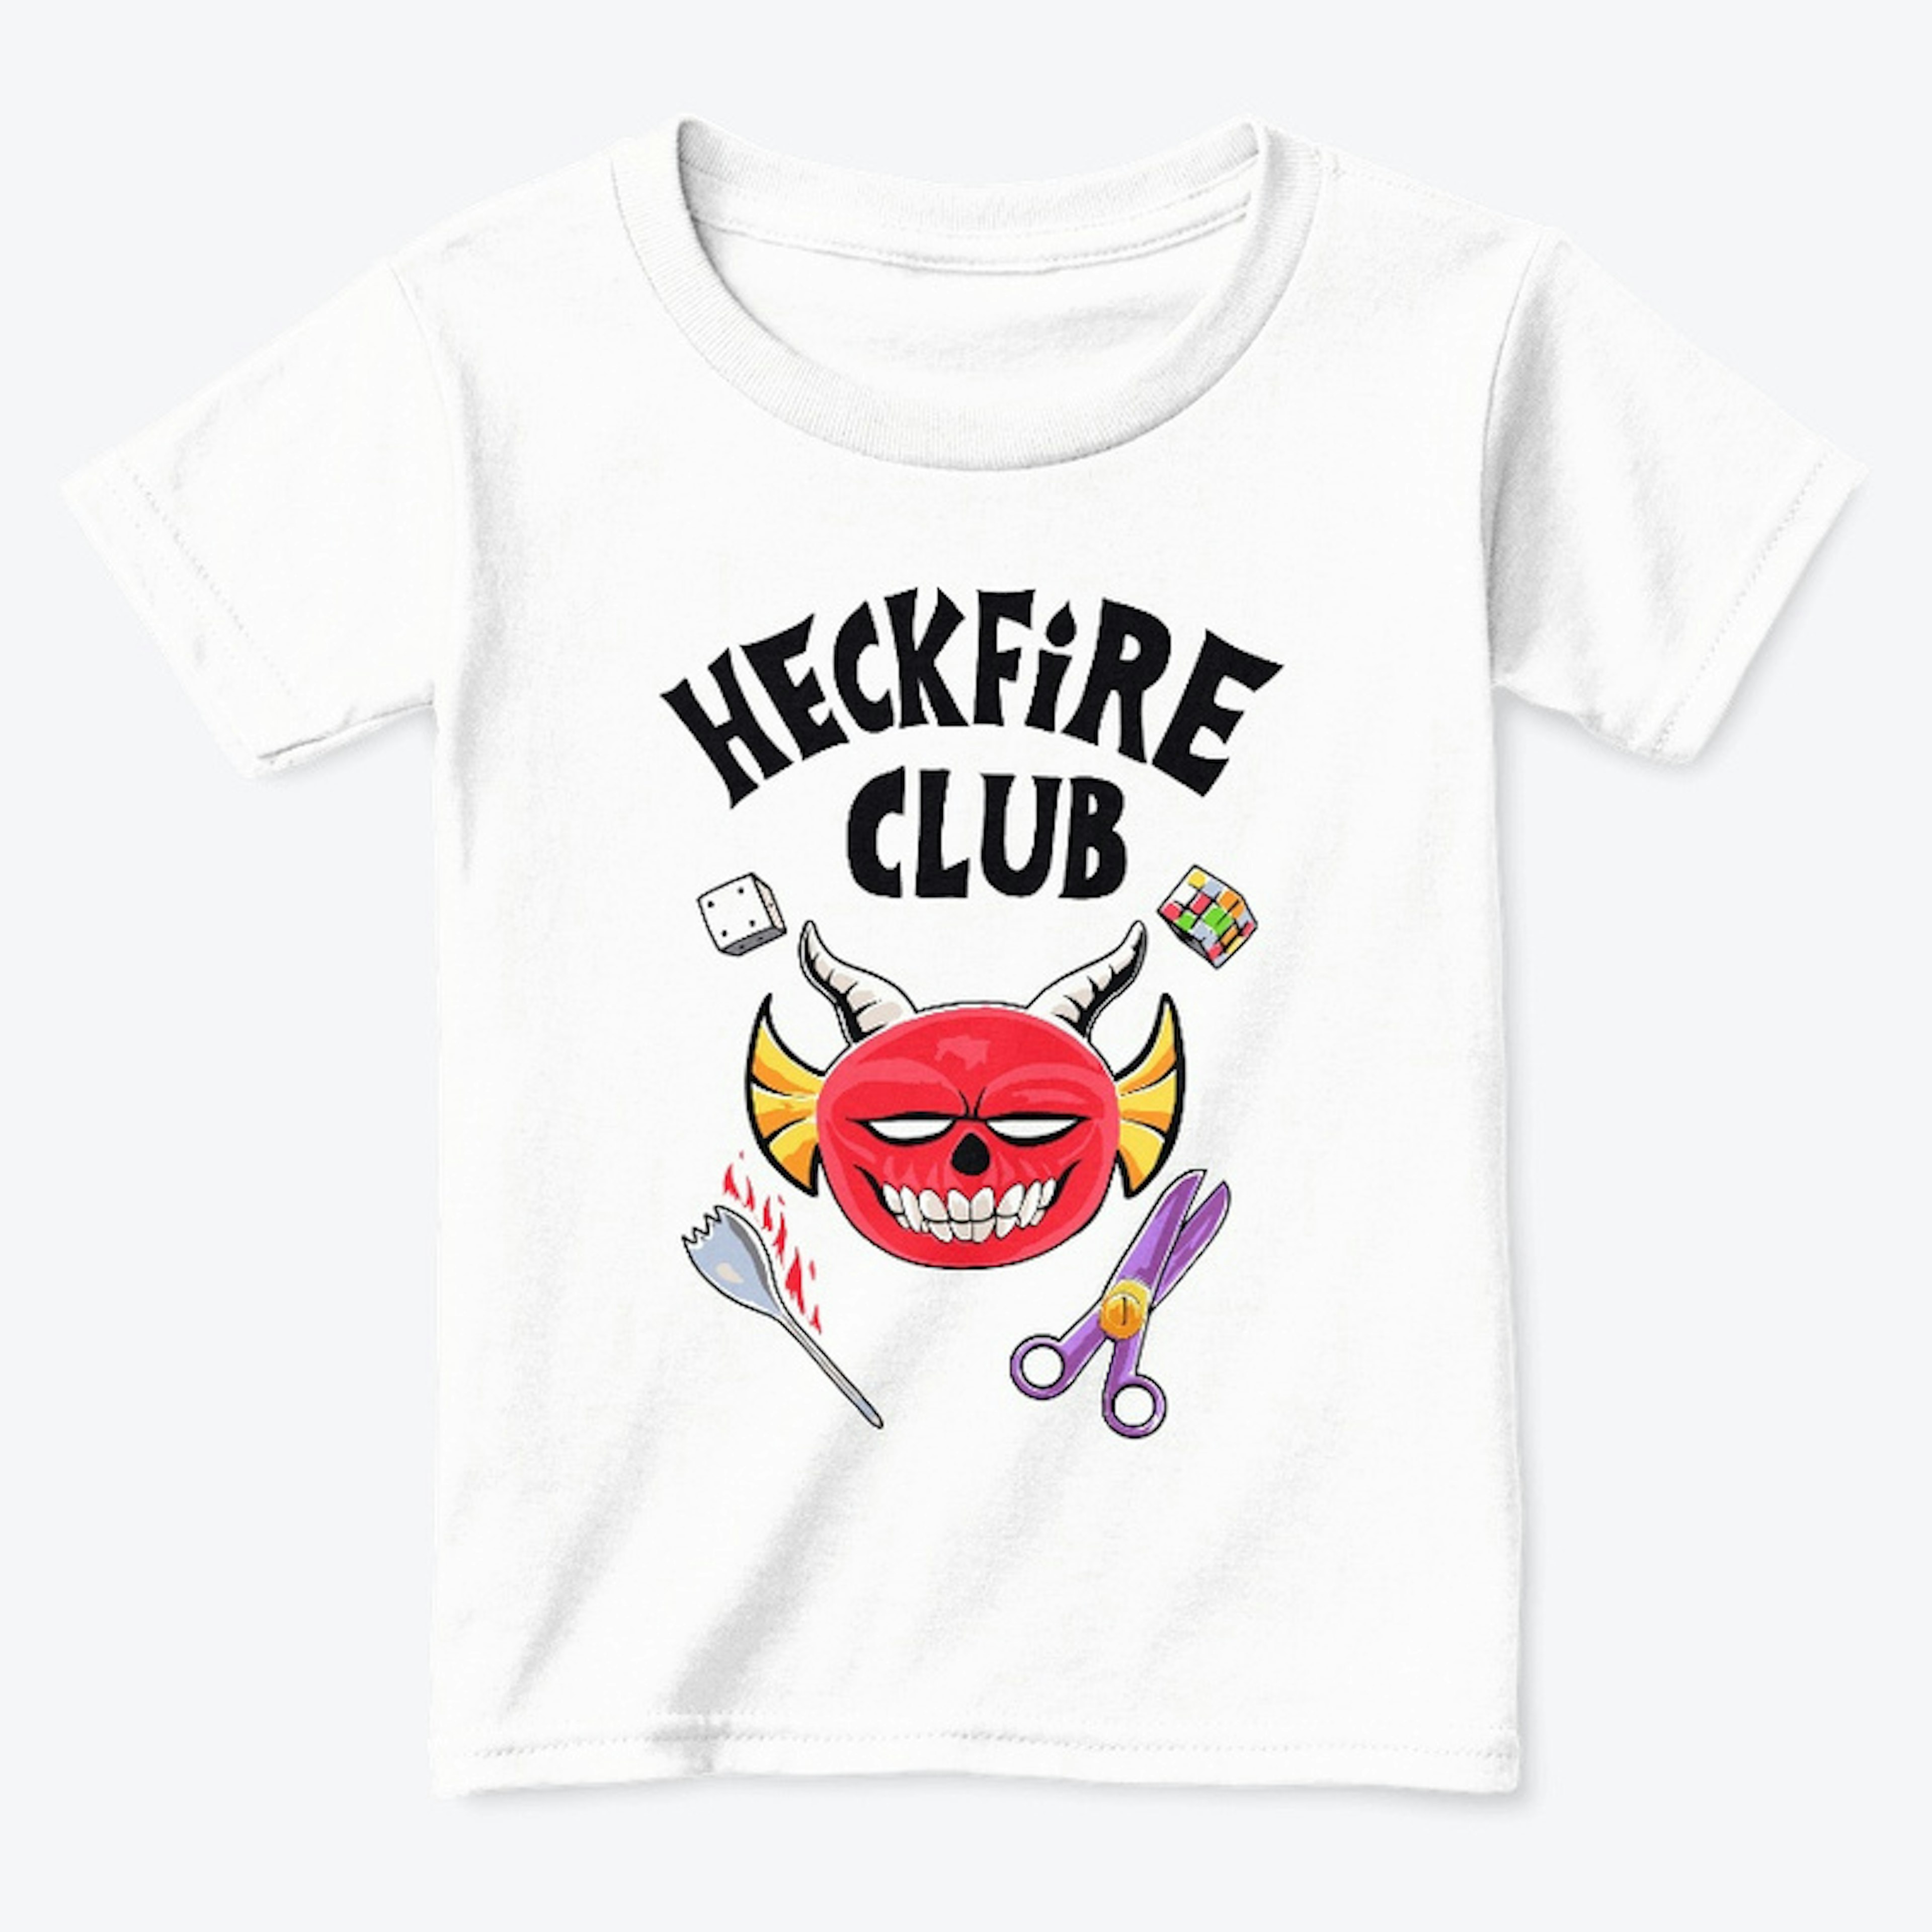 The Heckfire Club!